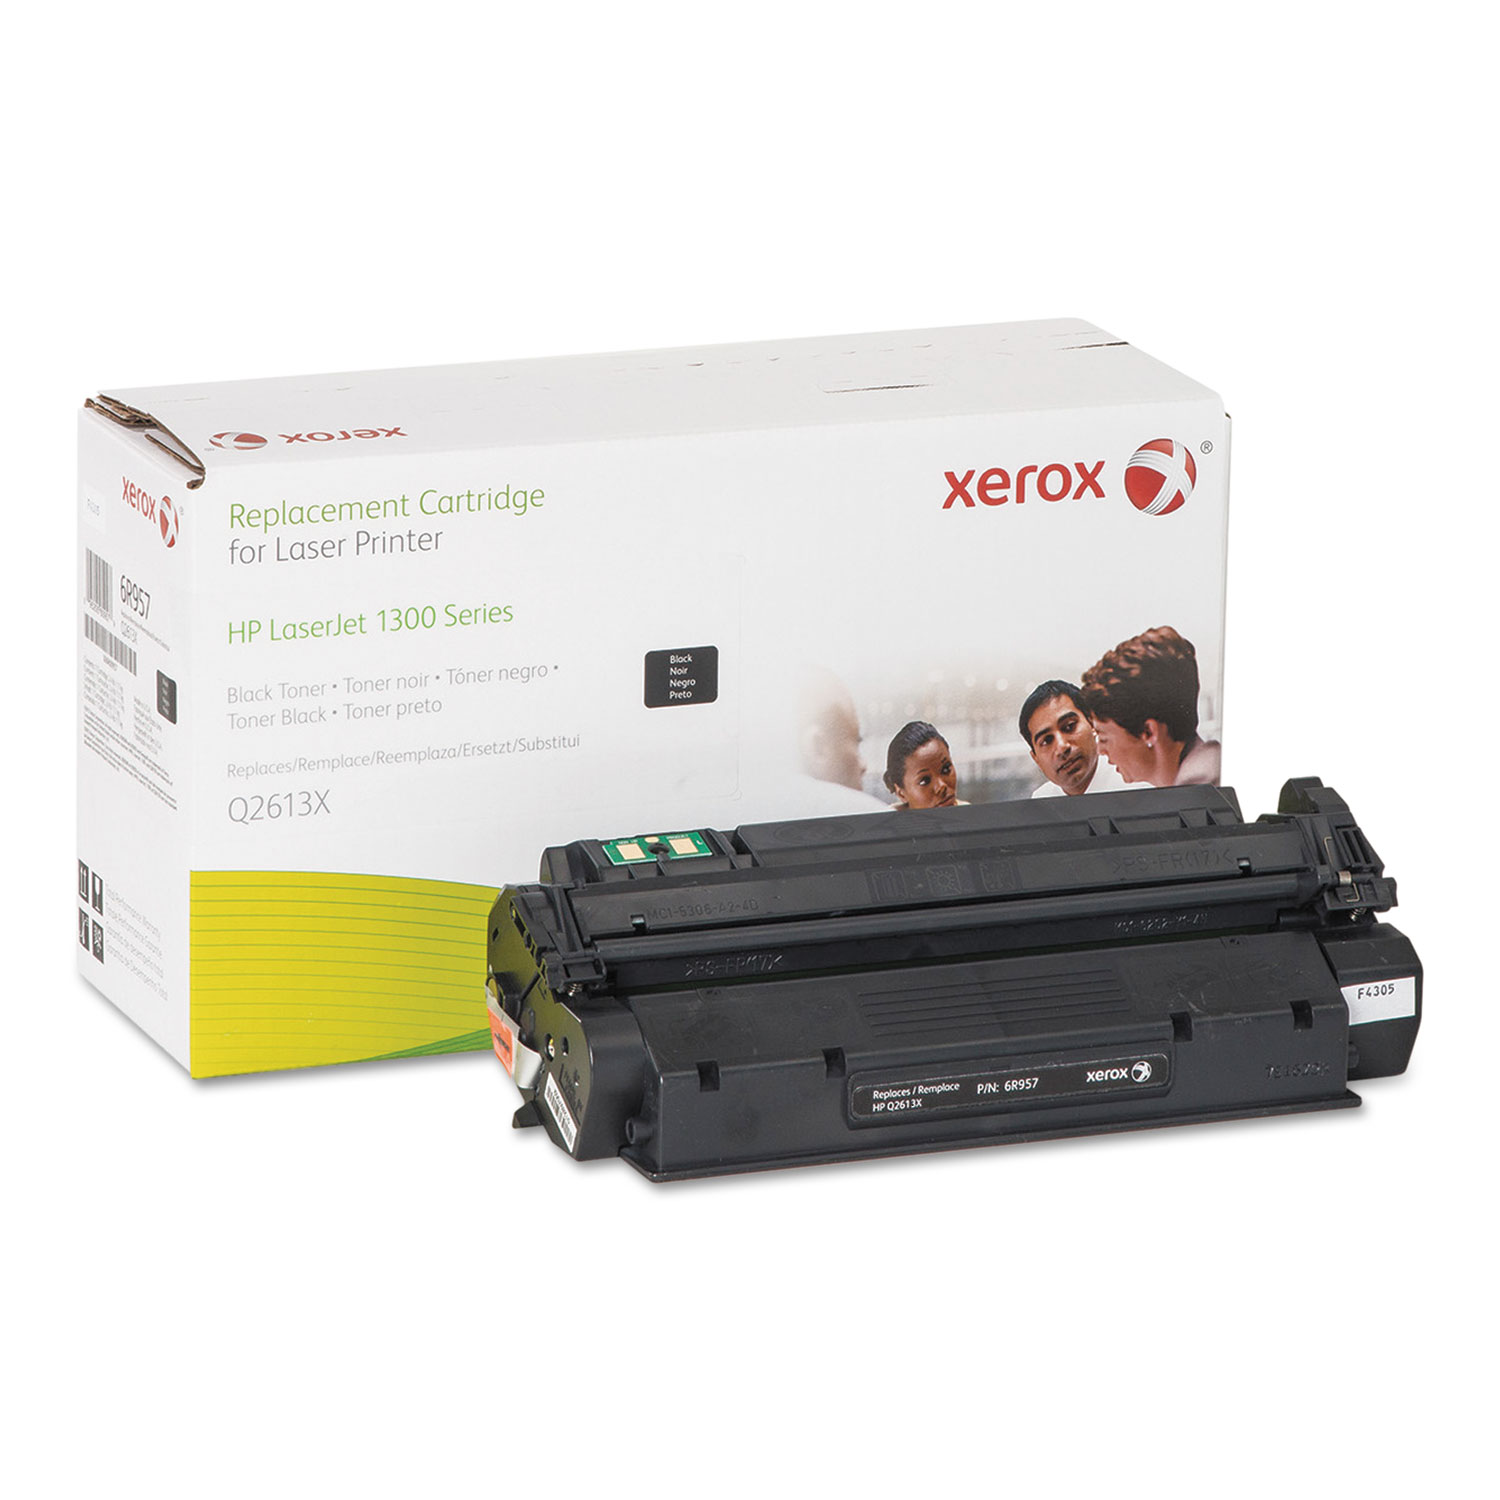  Xerox 006R00957 006R00957 Replacement High-Yield Toner for Q2613X (13X), Black (XER006R00957) 